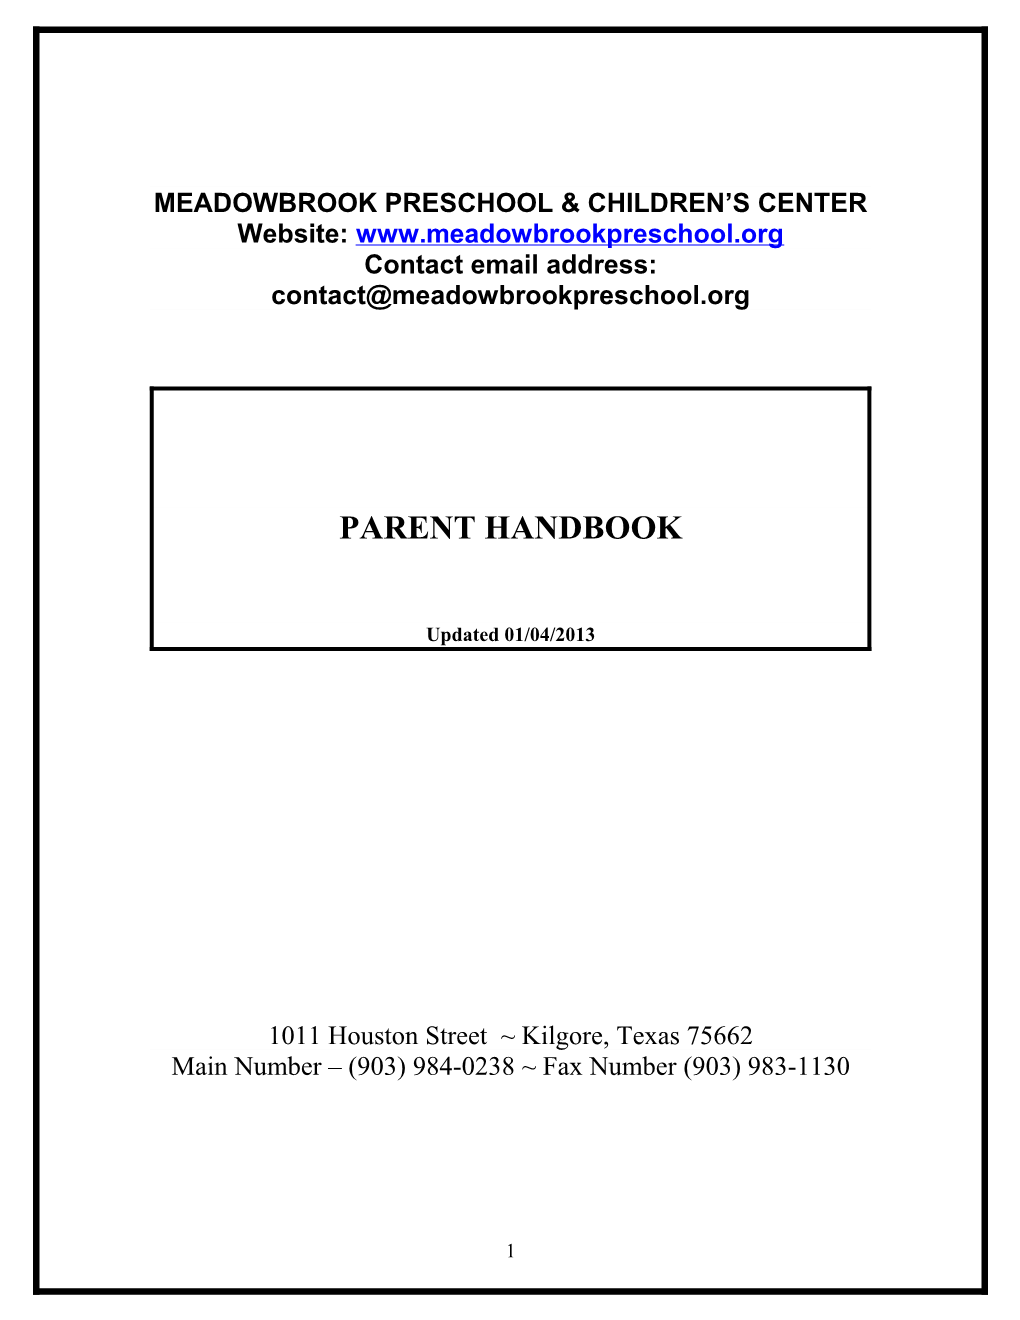 Meadowbrook Preschool & Children S Center